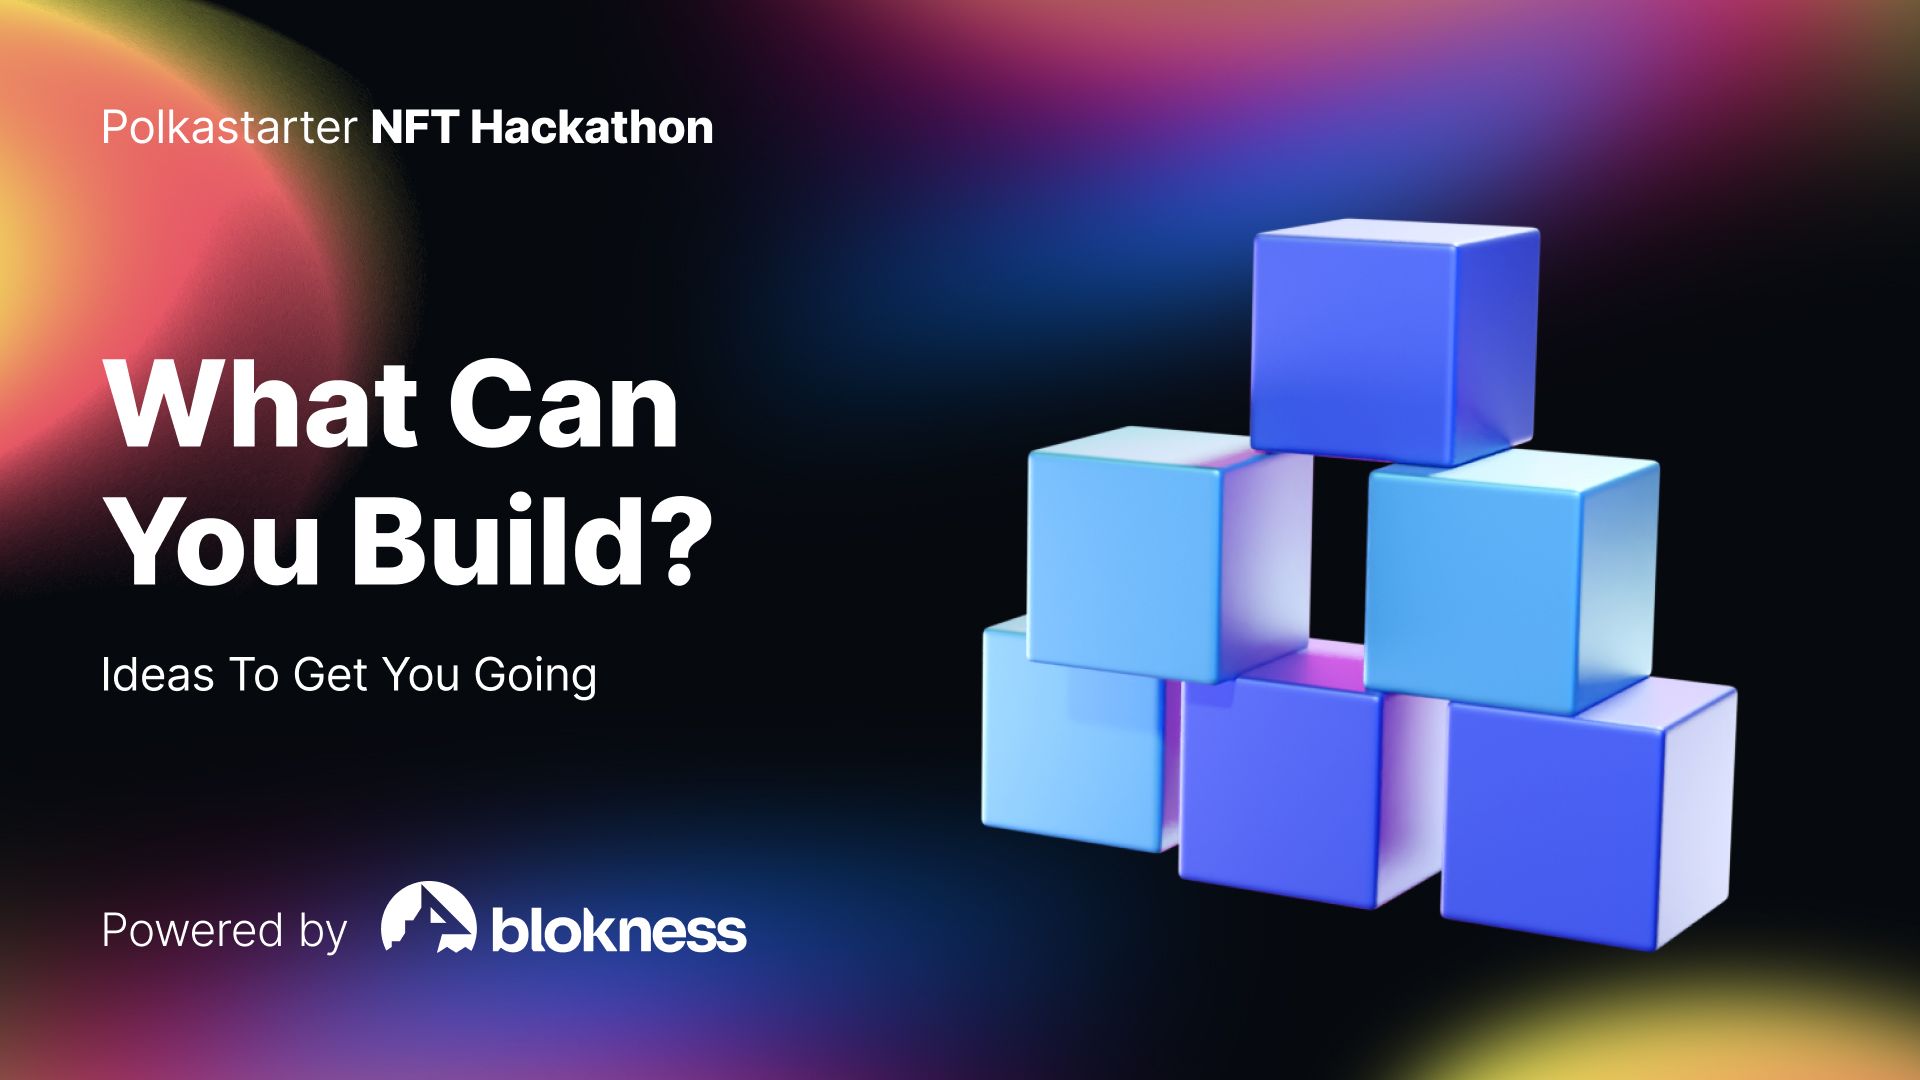 Polkastarter x Blokness NFT Hackathon Use Cases: What Can You Build?